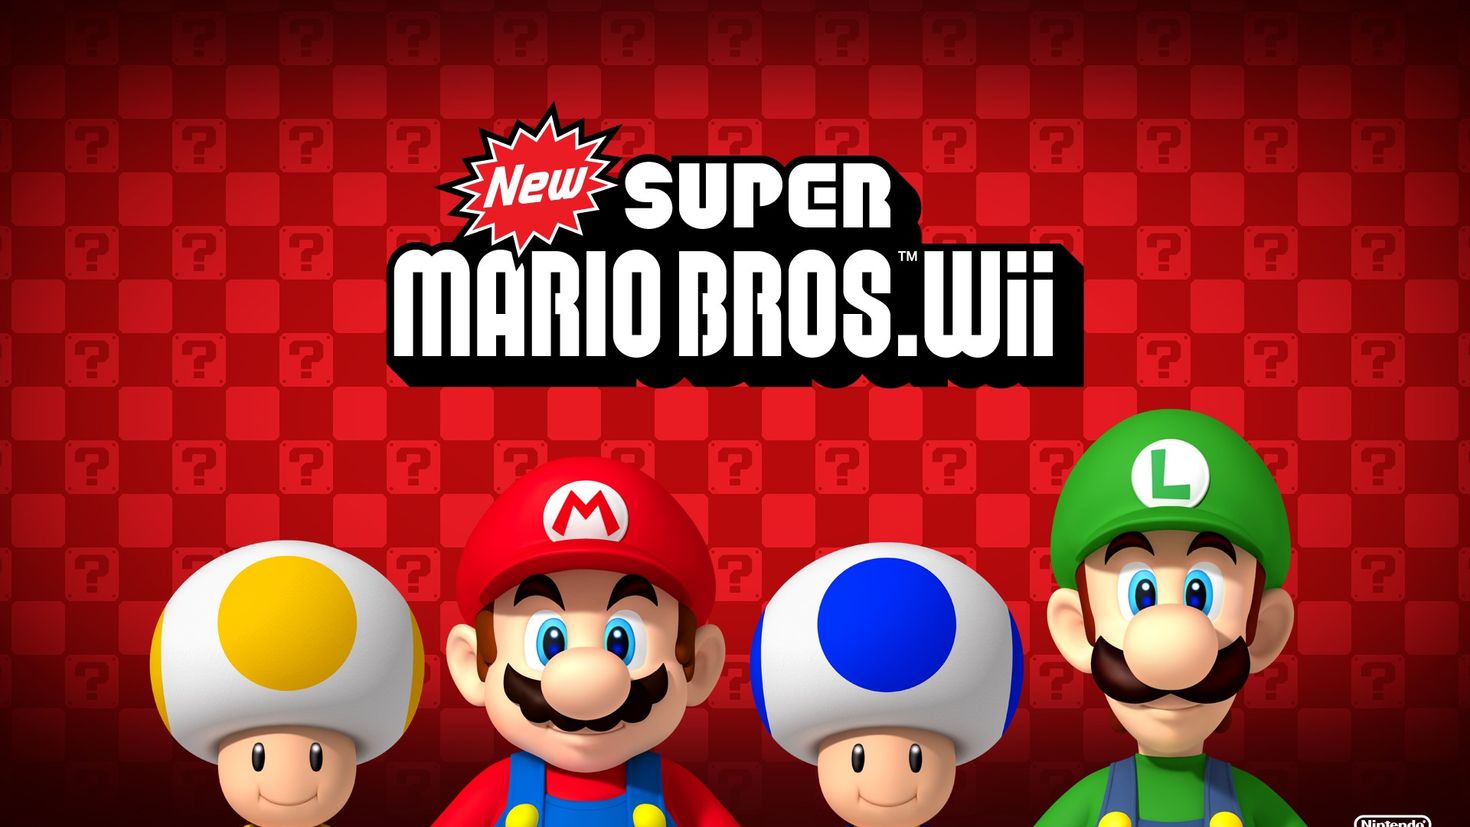 Mario new life. New super Mario Bros. 2 Nintendo Wii. Игры New super Mario Bros Wii. New super Mario brothers Wii. New super Mario Bros Wii Nintendo Wii.